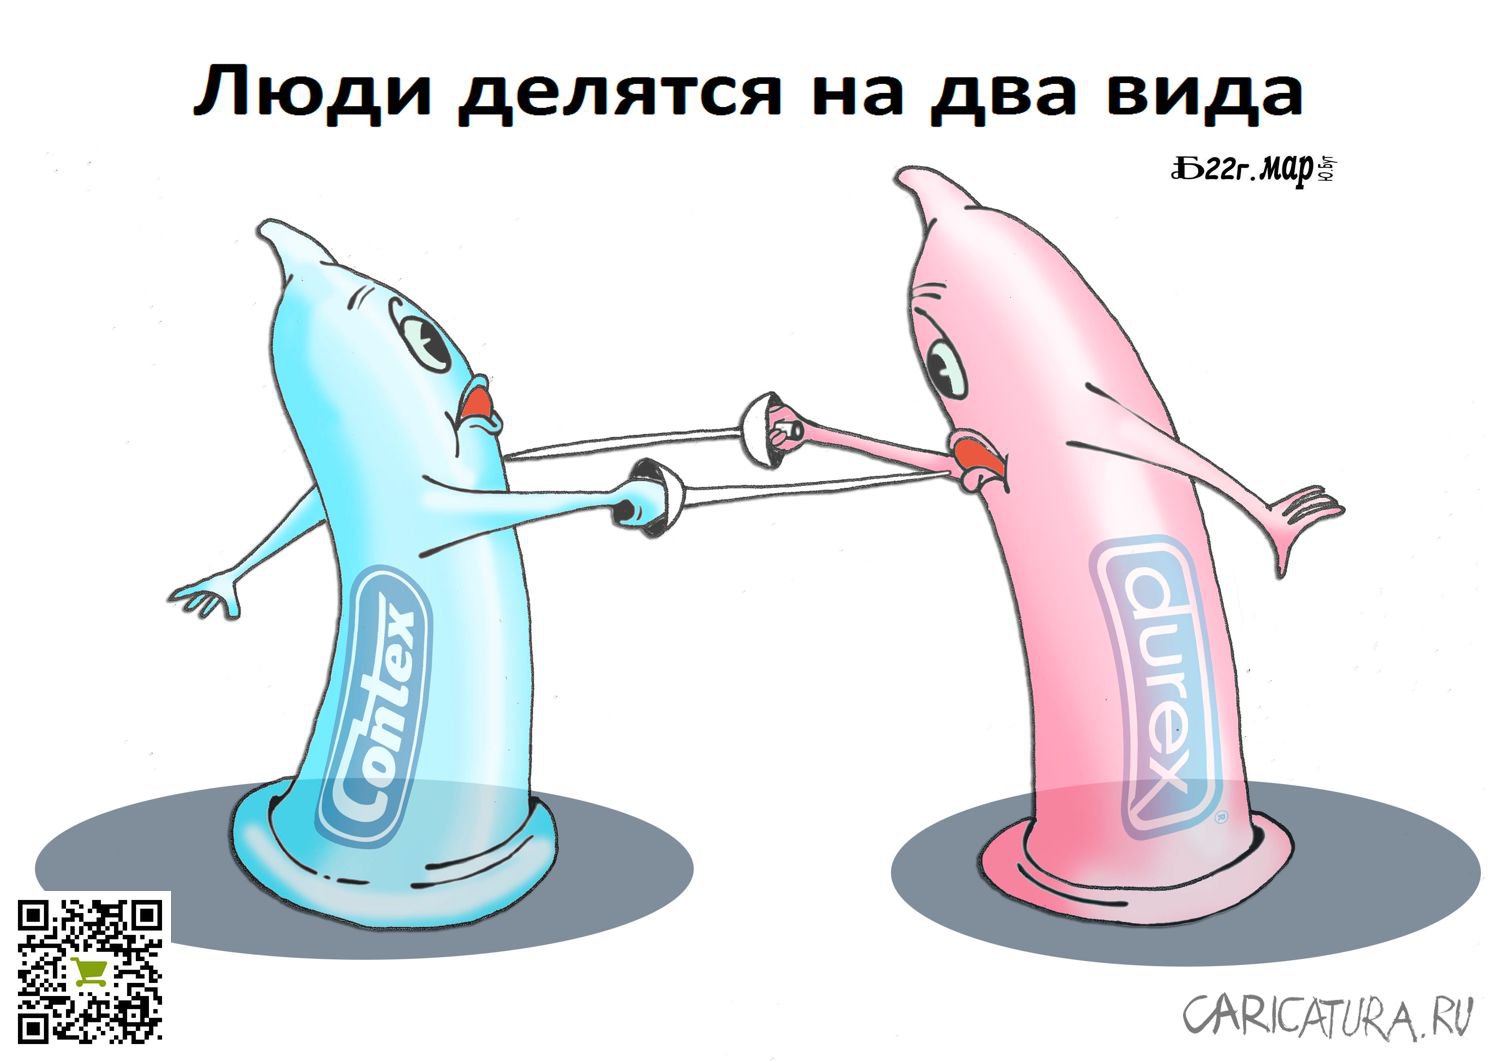 Карикатура "ПроАлягерм ту алягерм", Борис Демин